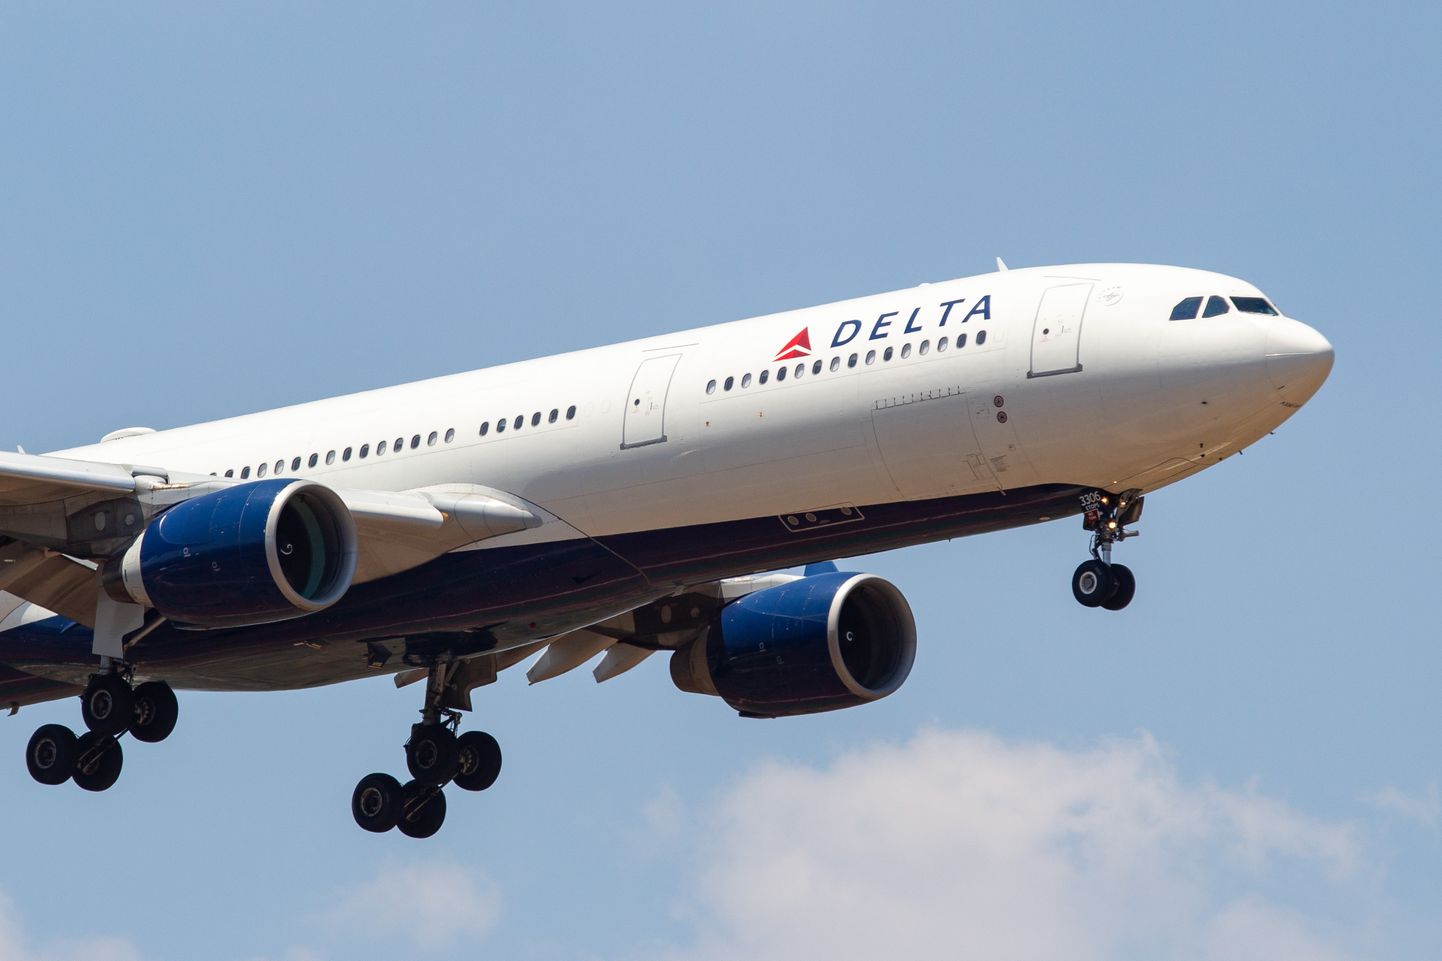 USA ettevõtte Delta Air Lines lennuk Airbus A330-300.